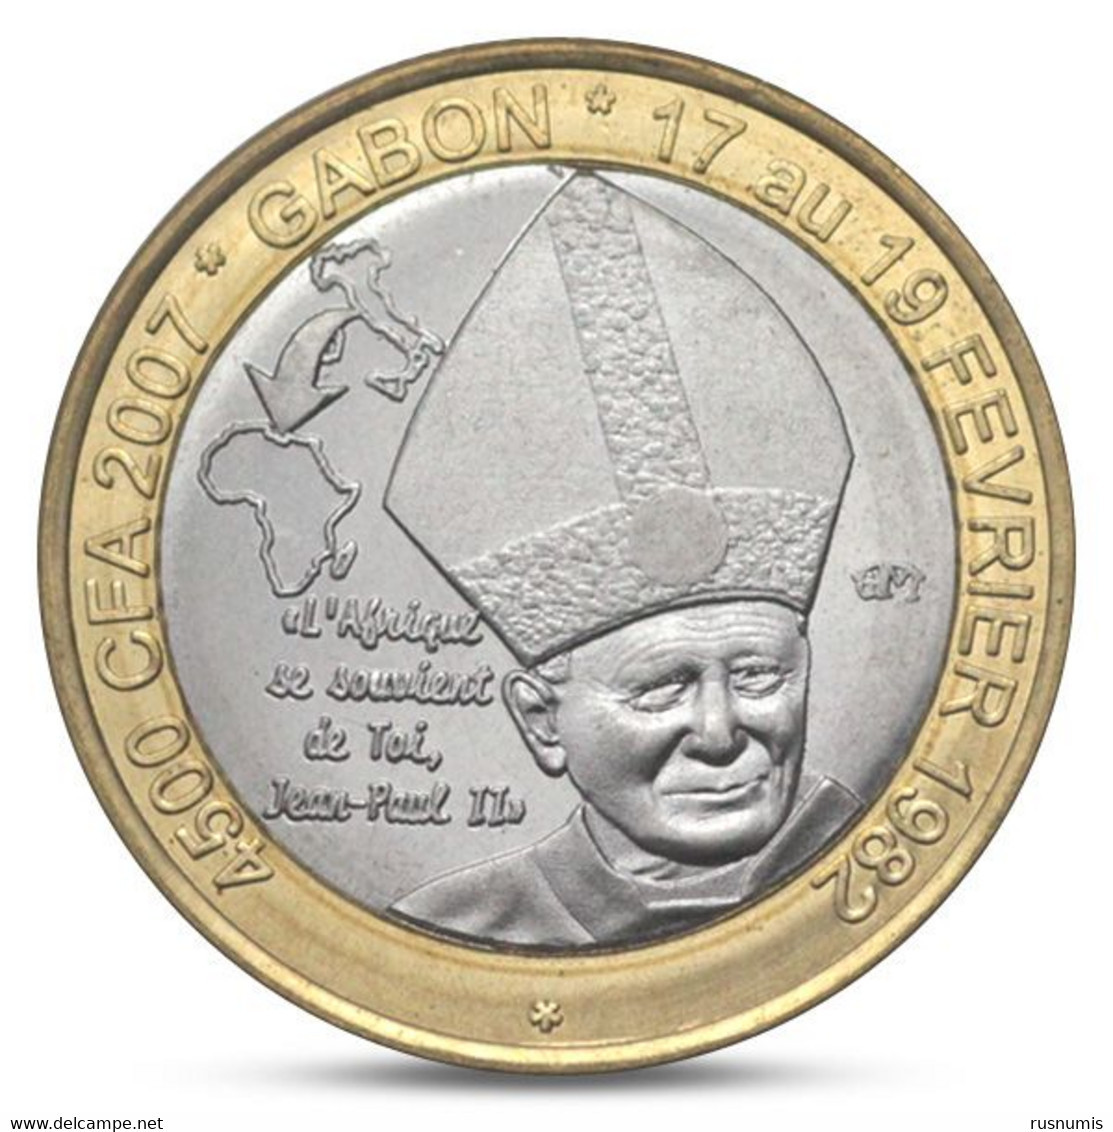 GABON 4500 CFA 3 AFRICA UNUSUAL POPE JEAN PAUL II BIMETAL BI-METALLIC 2007 UNC - Gabon